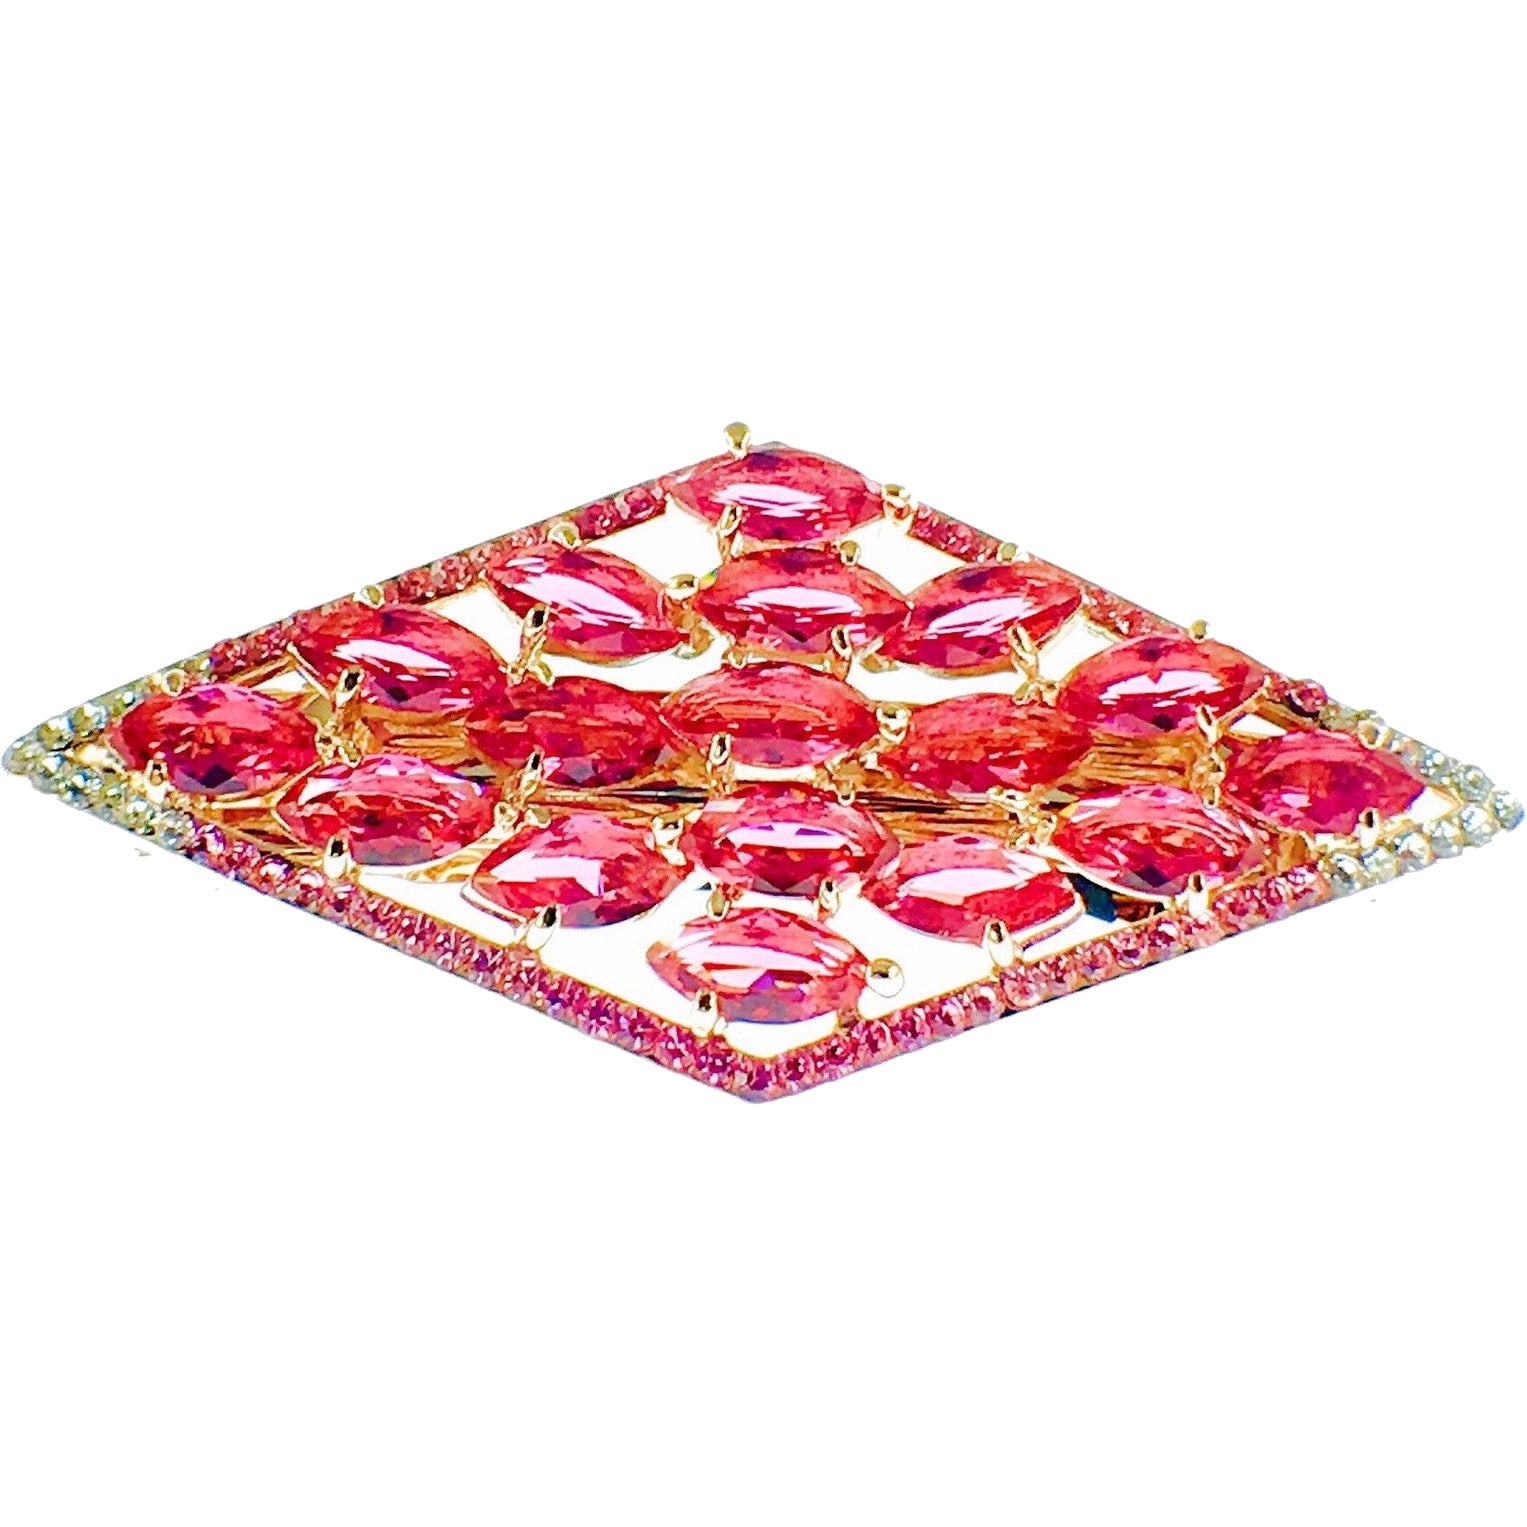 Diamond shape Barrette Handmade use Swarovski Crystal gold base Hot Pink, Barrette - MOGHANT